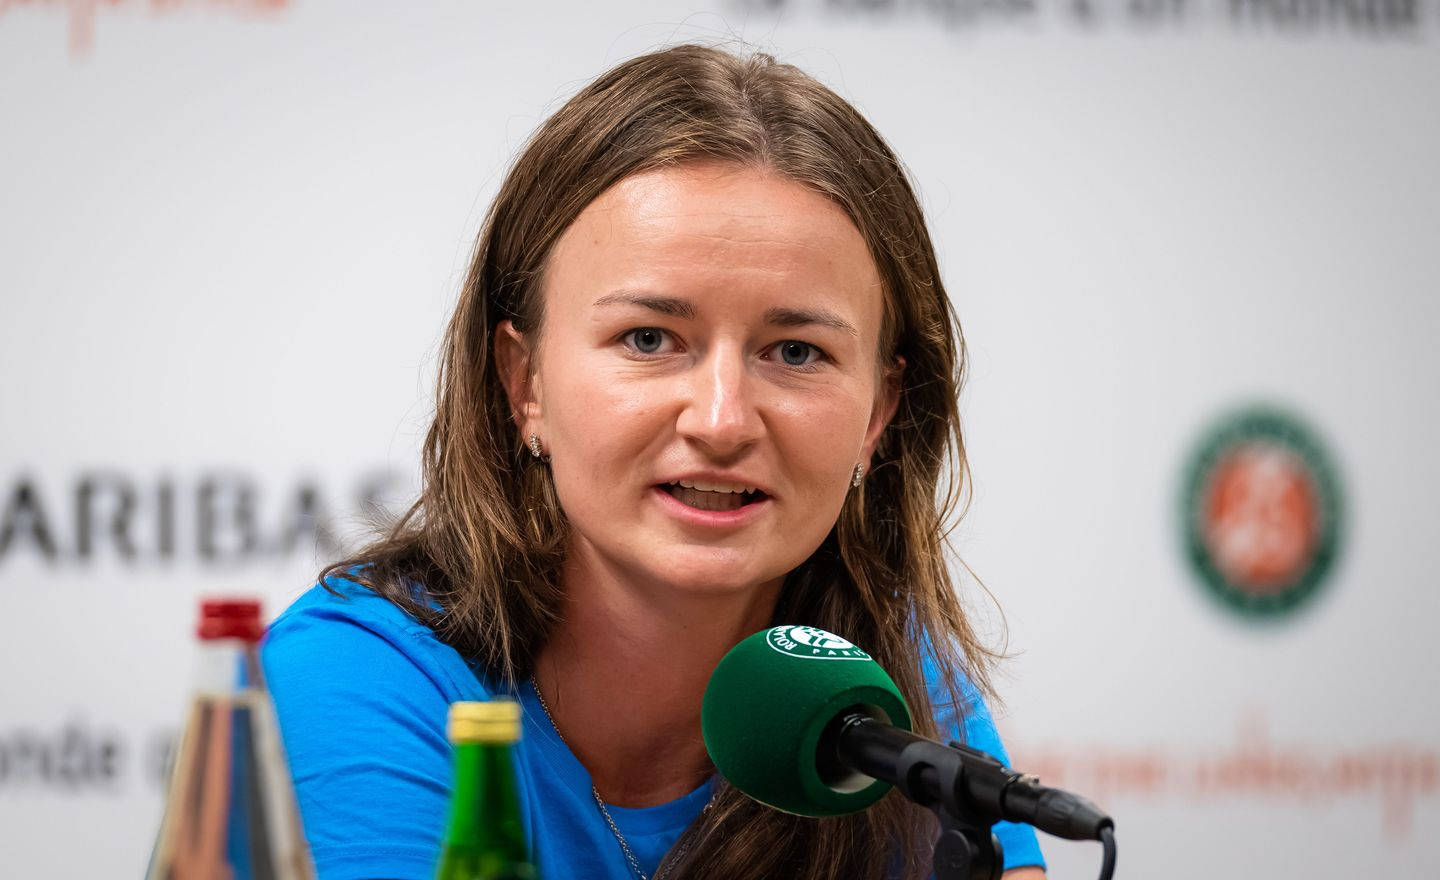 Barbora Krejcikova Tennis Player Interview Wallpaper